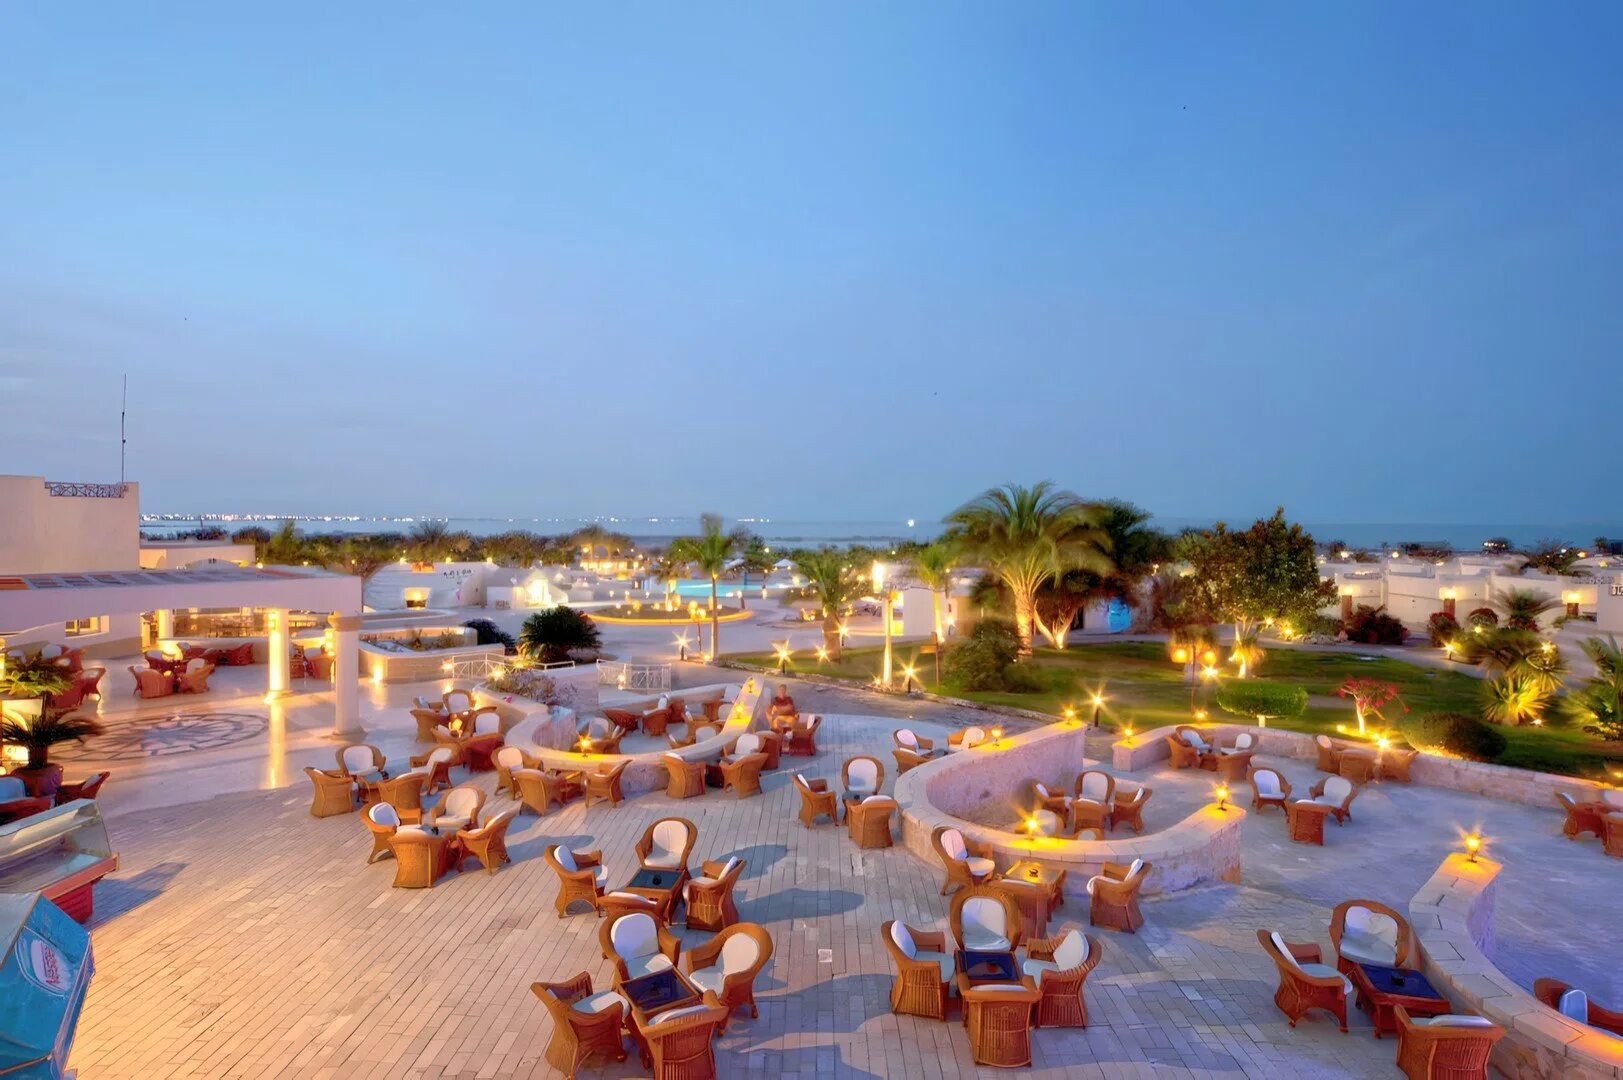 Coral beach хургада. Coral Beach Hotel Hurghada Египет Хургада. Корал Бич отель Хургада. Корал Бич Резорт Хургада 4. Египет Хургада отель Корал Бич Резорт 4 звезды.